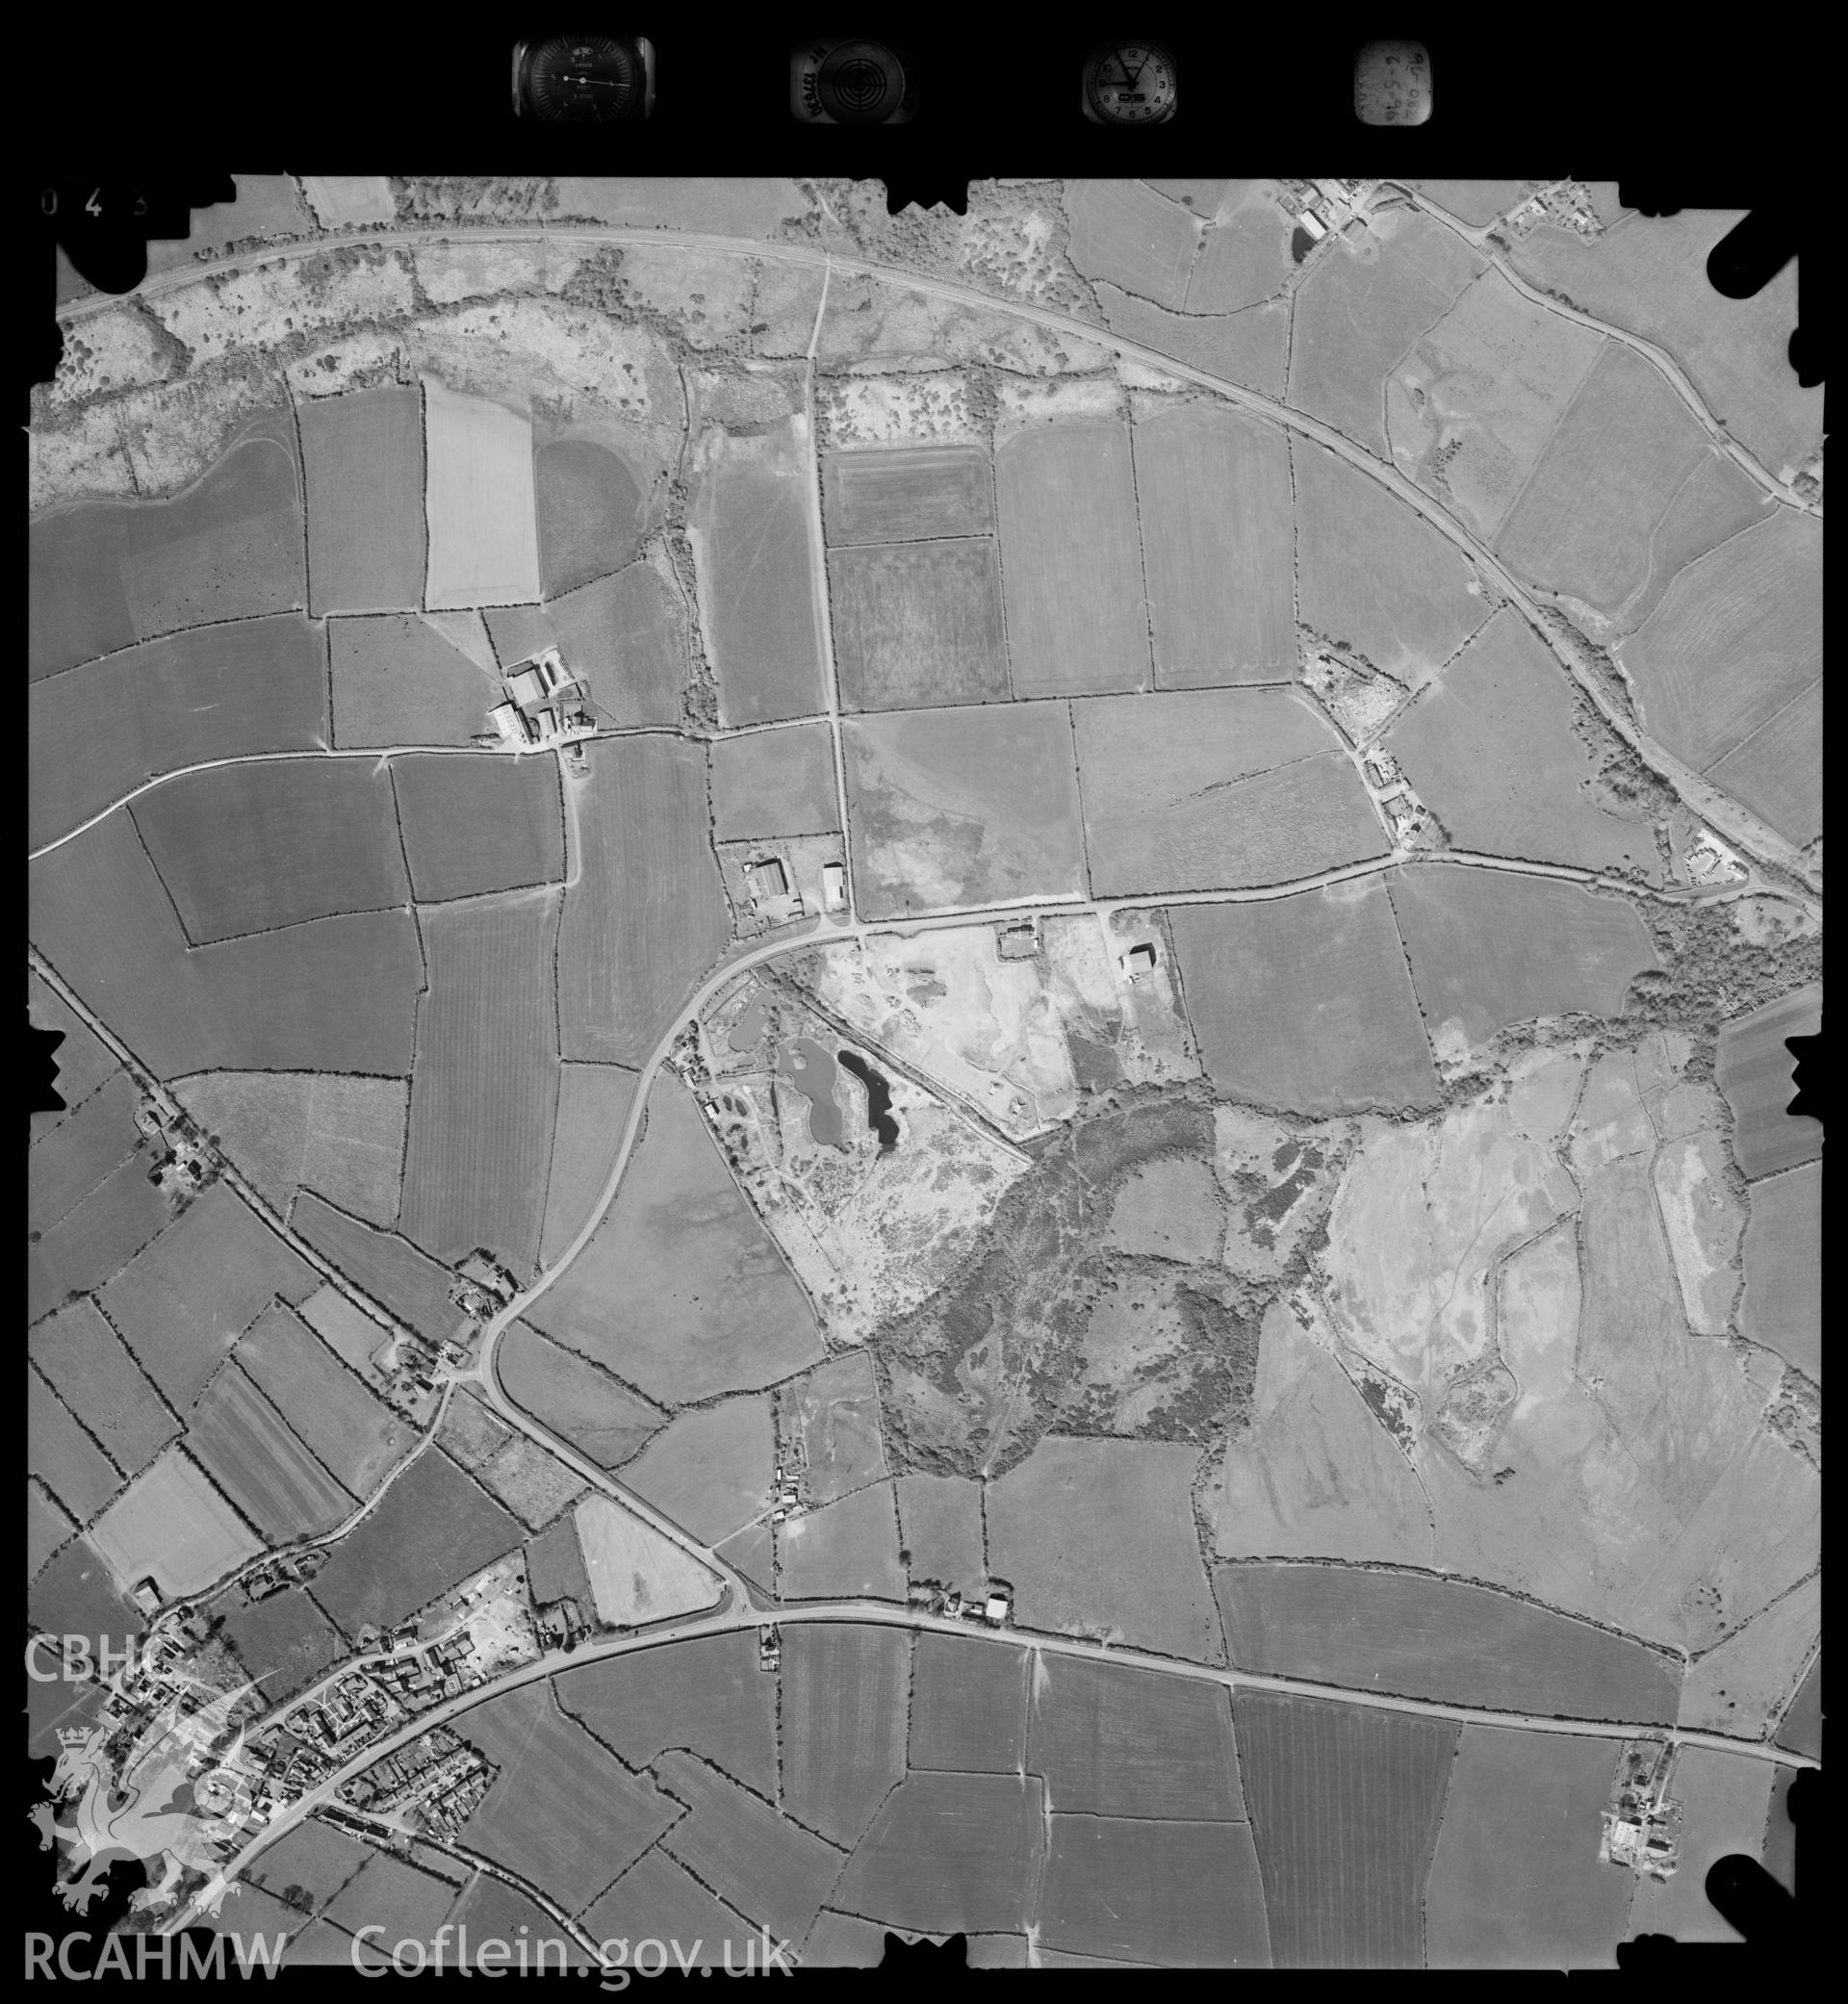 Digitized copy of an aerial photograph showing the Waun Ddu area, Scleddau,  taken by Ordnance Survey, 1996